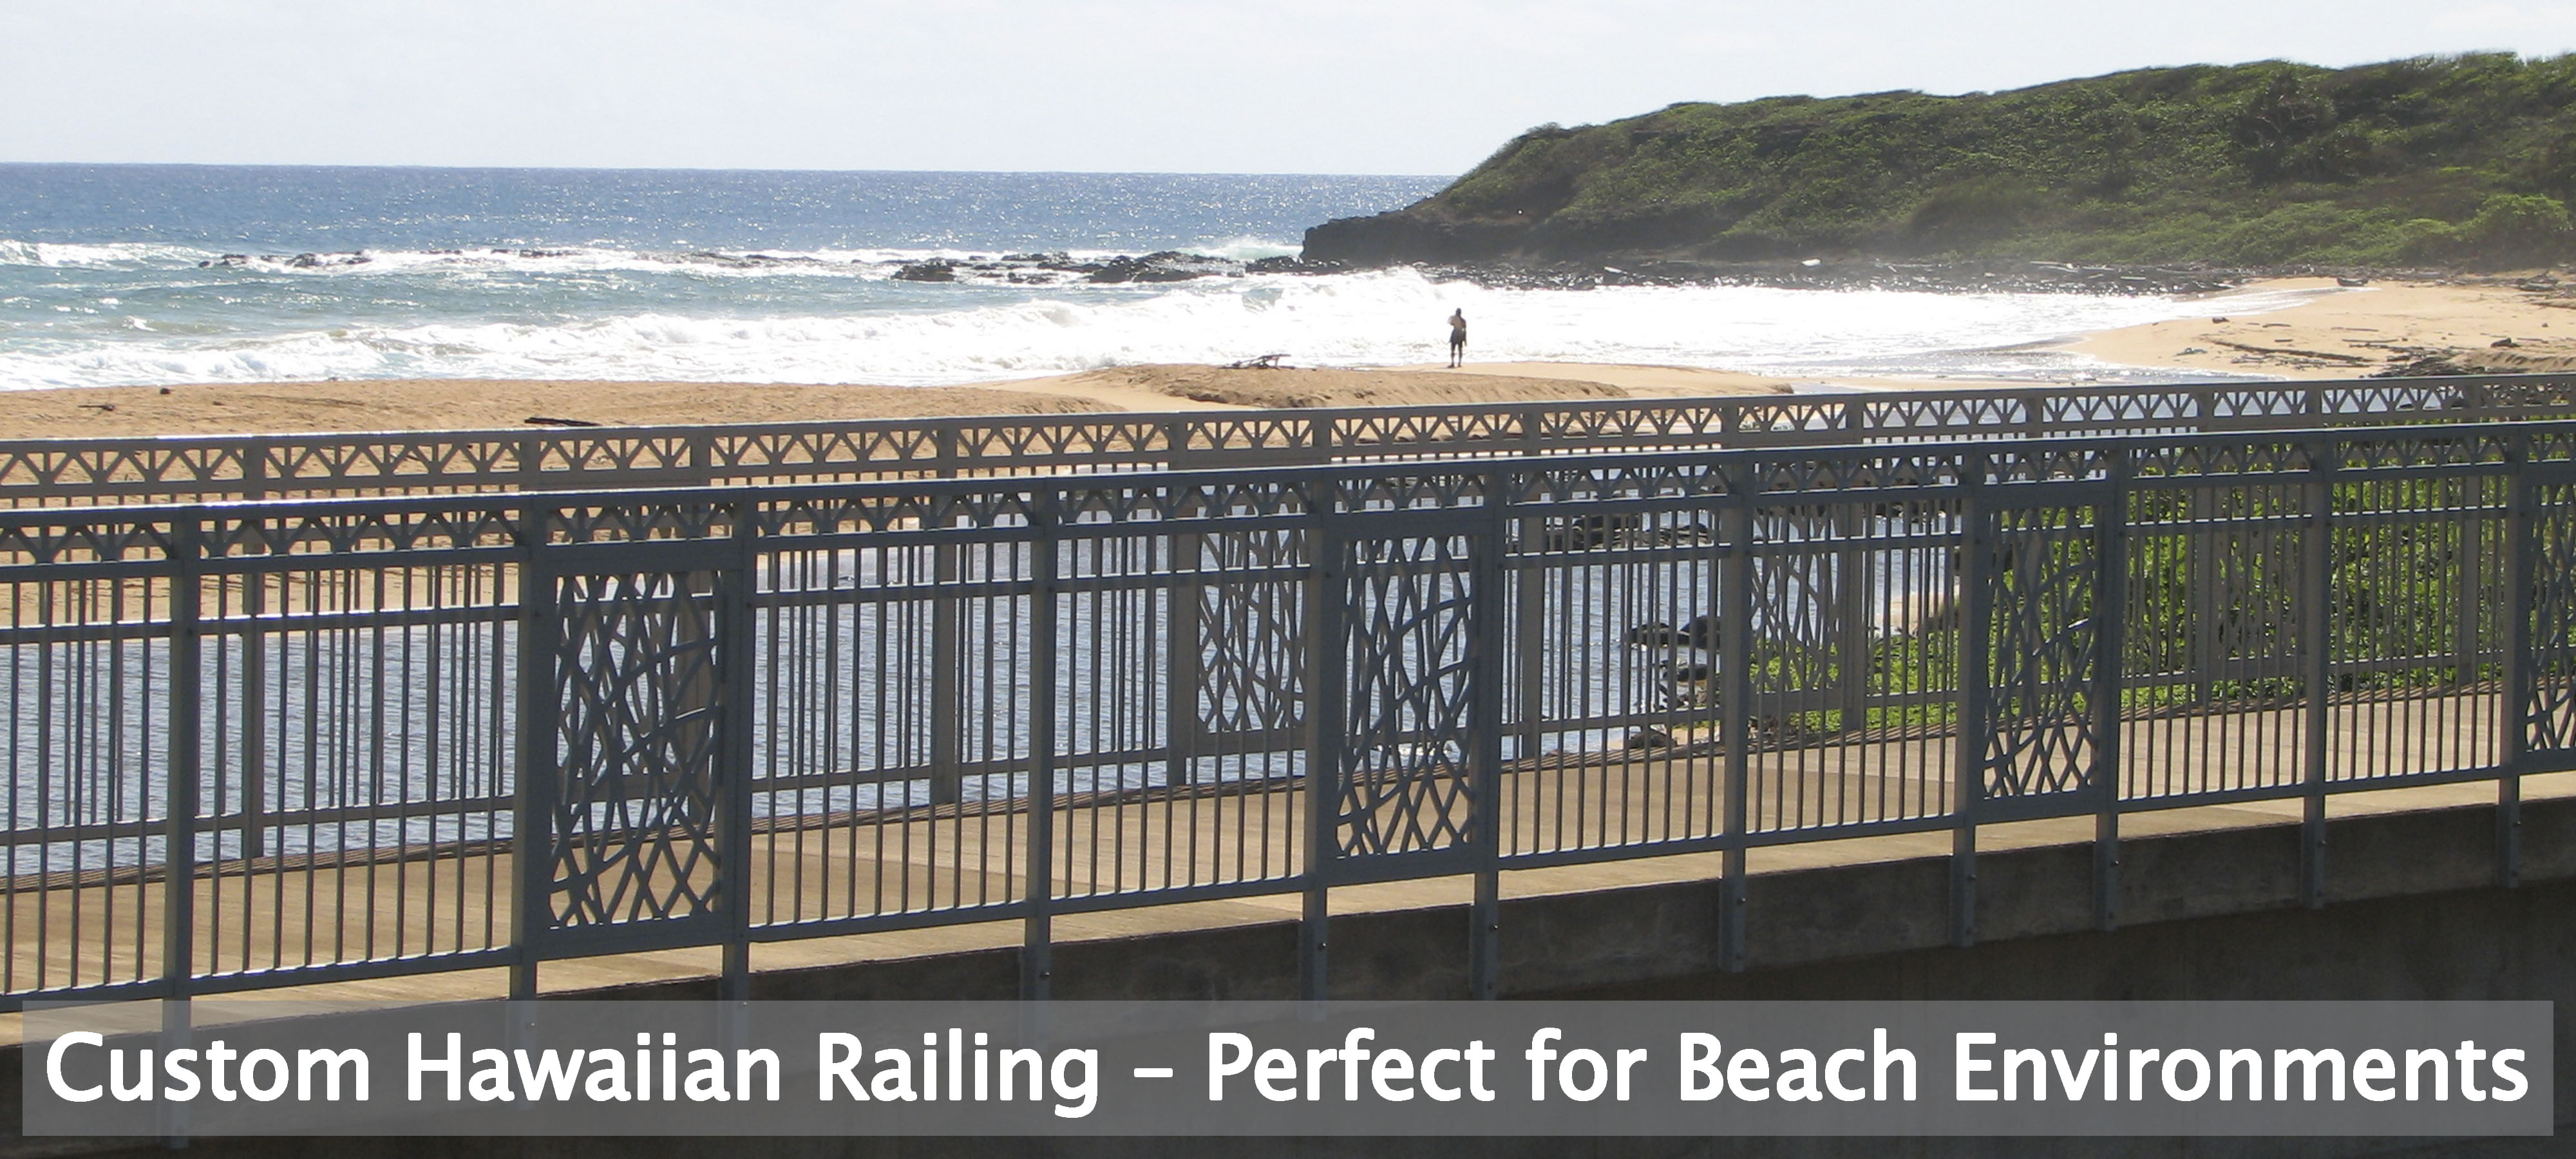 Custom-Hawaiian-Railing-Perfect-for-Beach-Environments.jpg